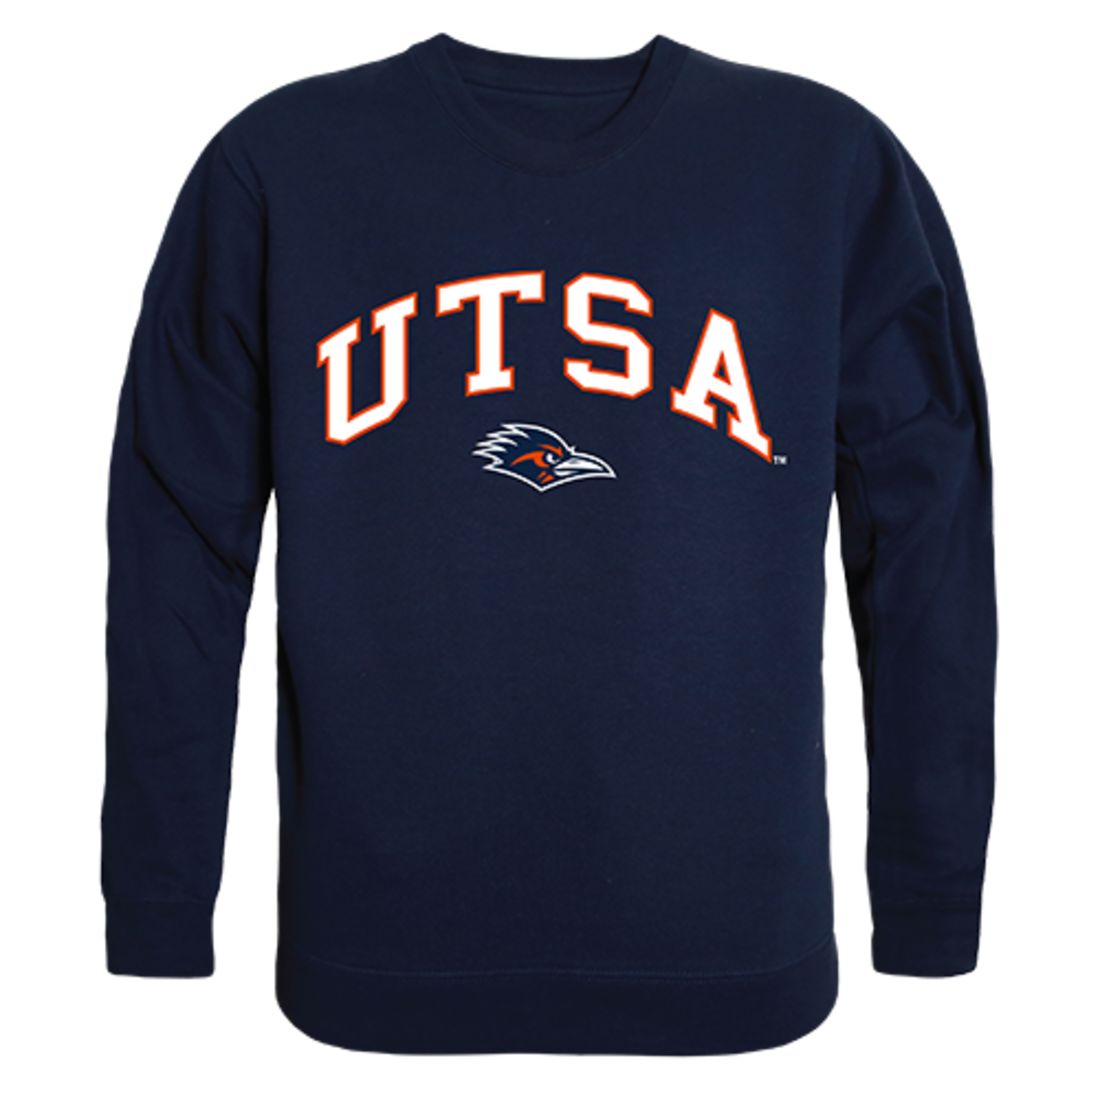 UTSA University of Texas at San Antonio Campus Crewneck Pullover Sweatshirt Sweater Navy-Campus-Wardrobe